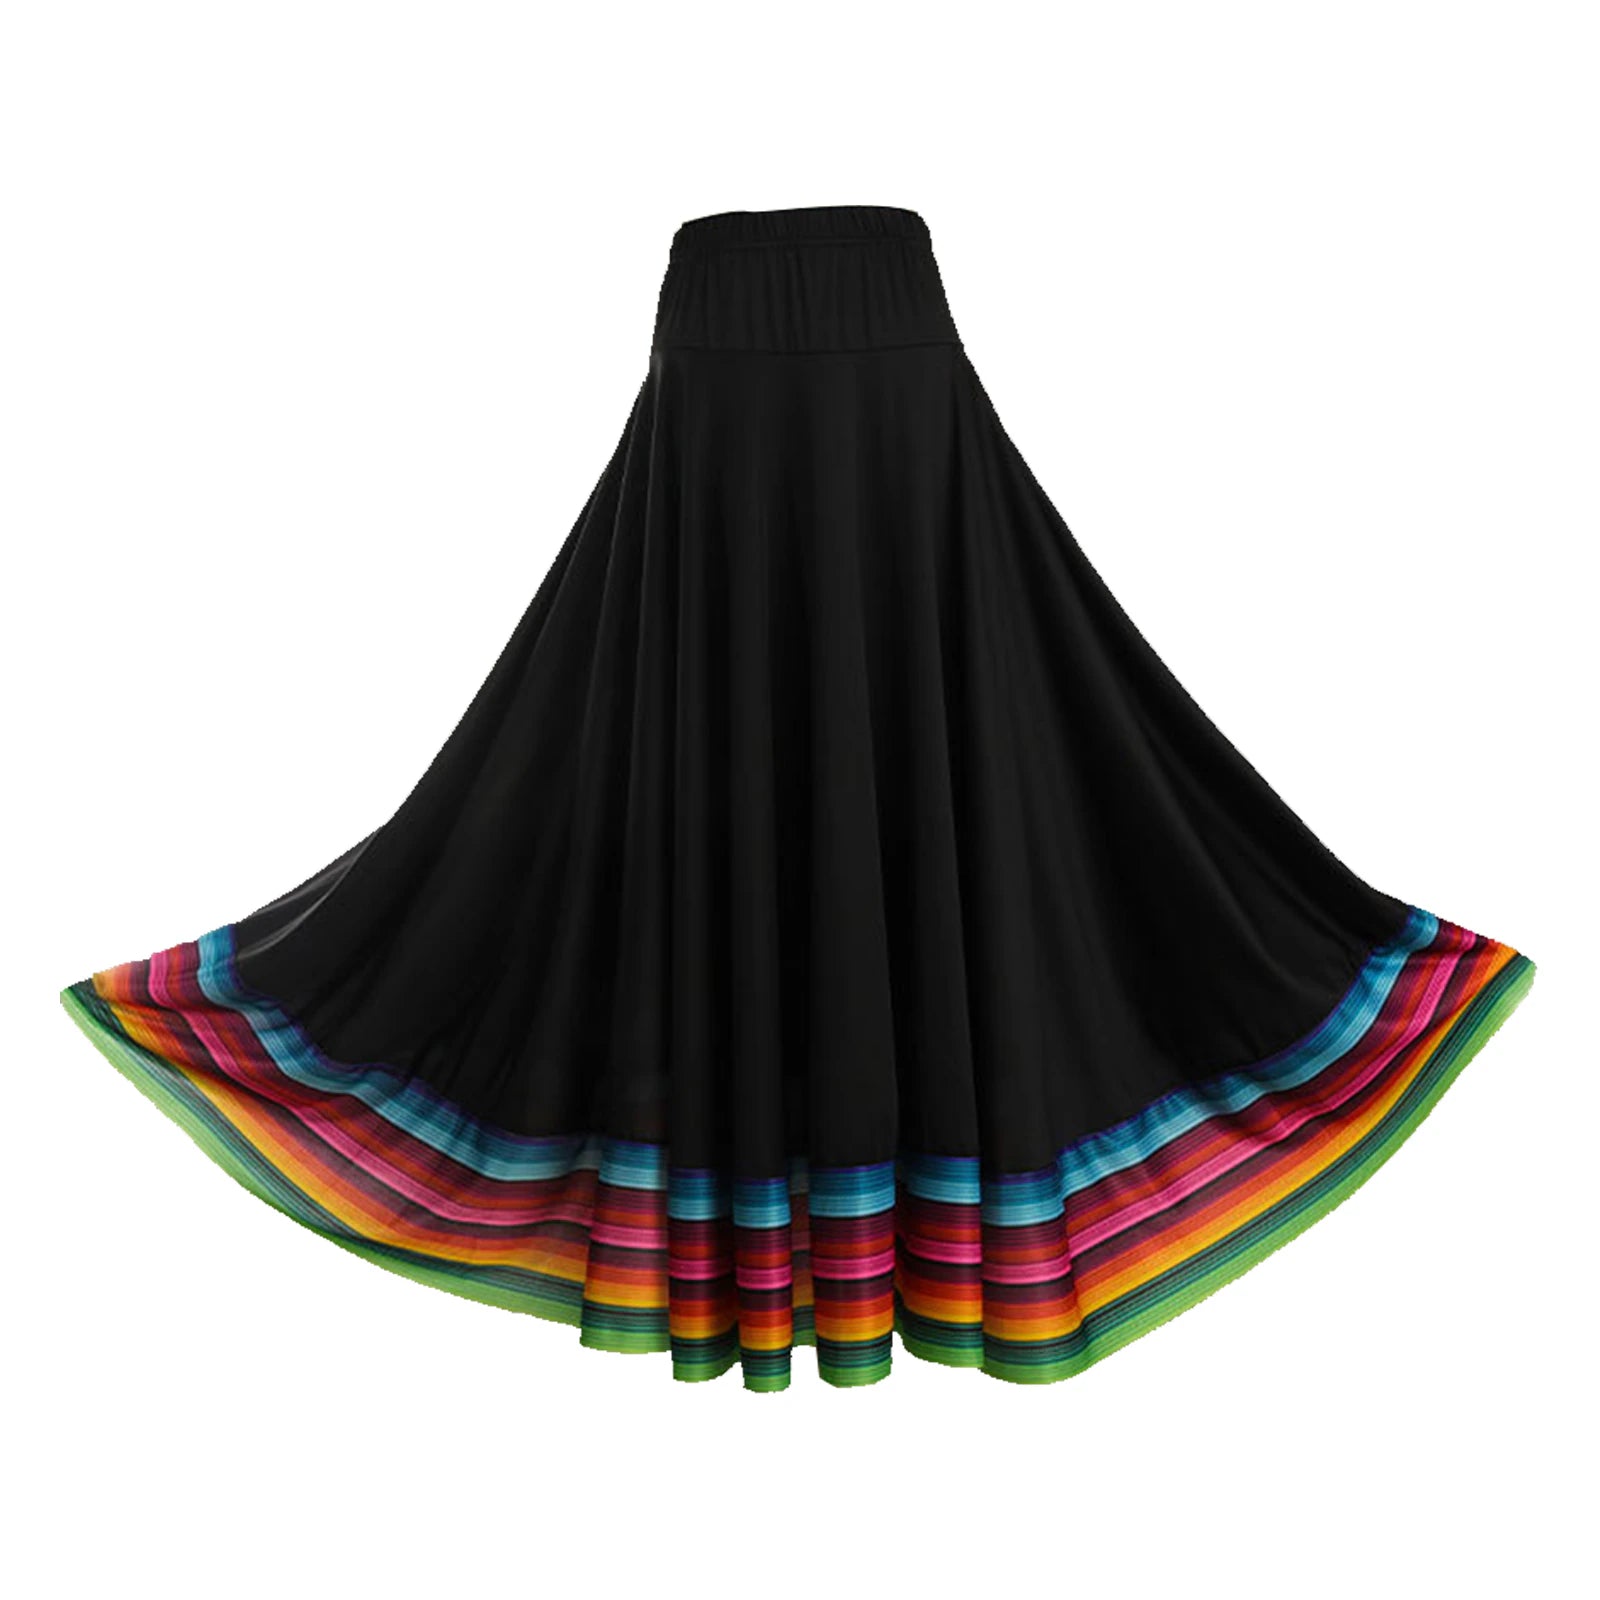 Flamenco/Gipsy Skirt - Dancewear by Patricia